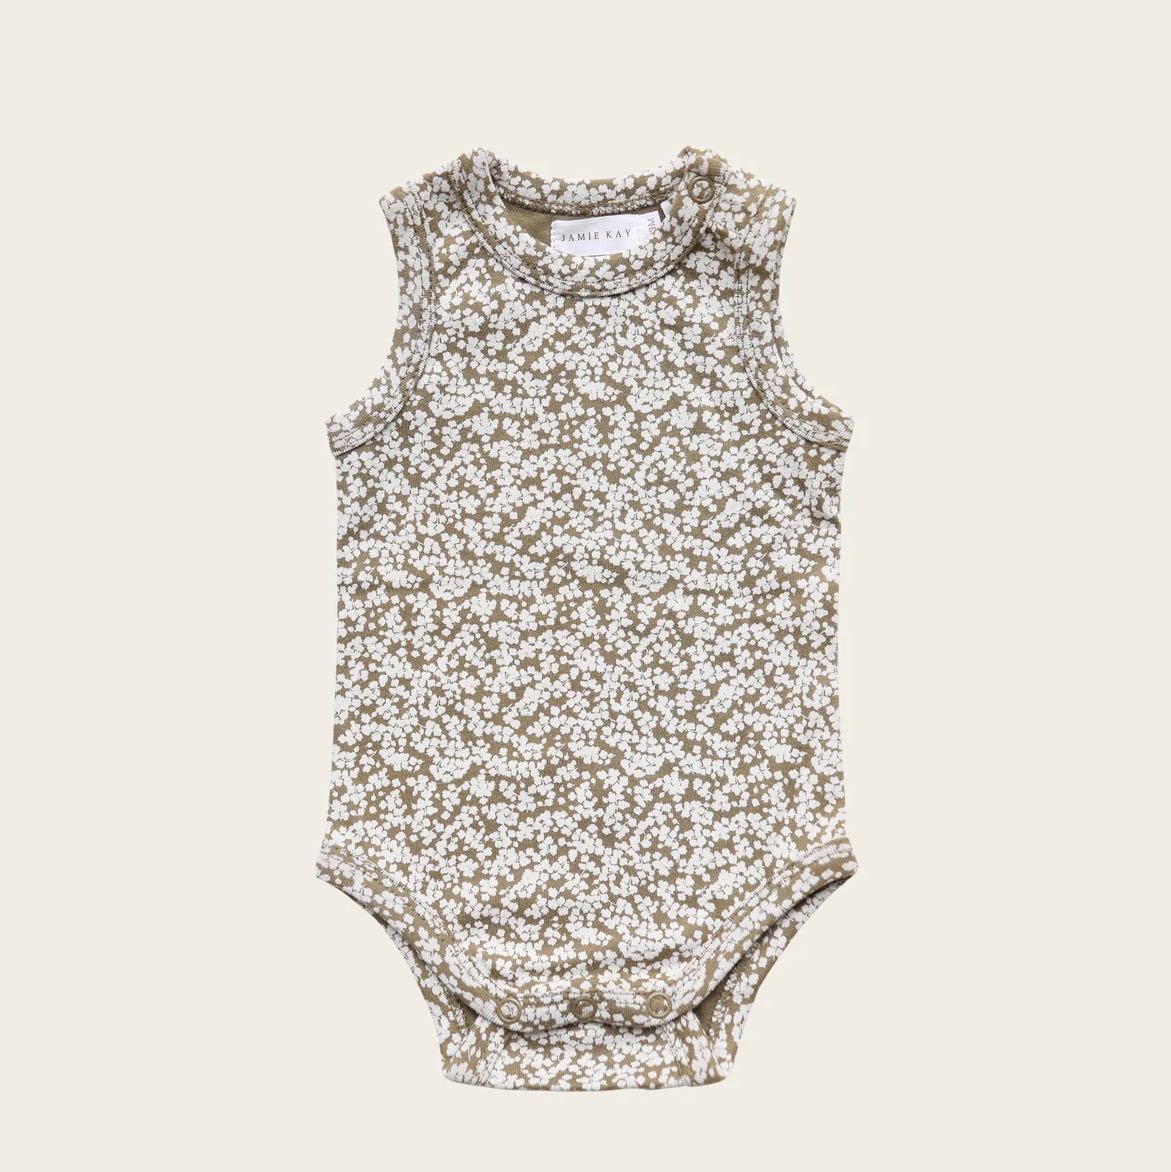 Jamie Kay Organic Cotton Bodysuit - Hawthorn on Liberty, Babies & Kids,  Babies & Kids Fashion on Carousell